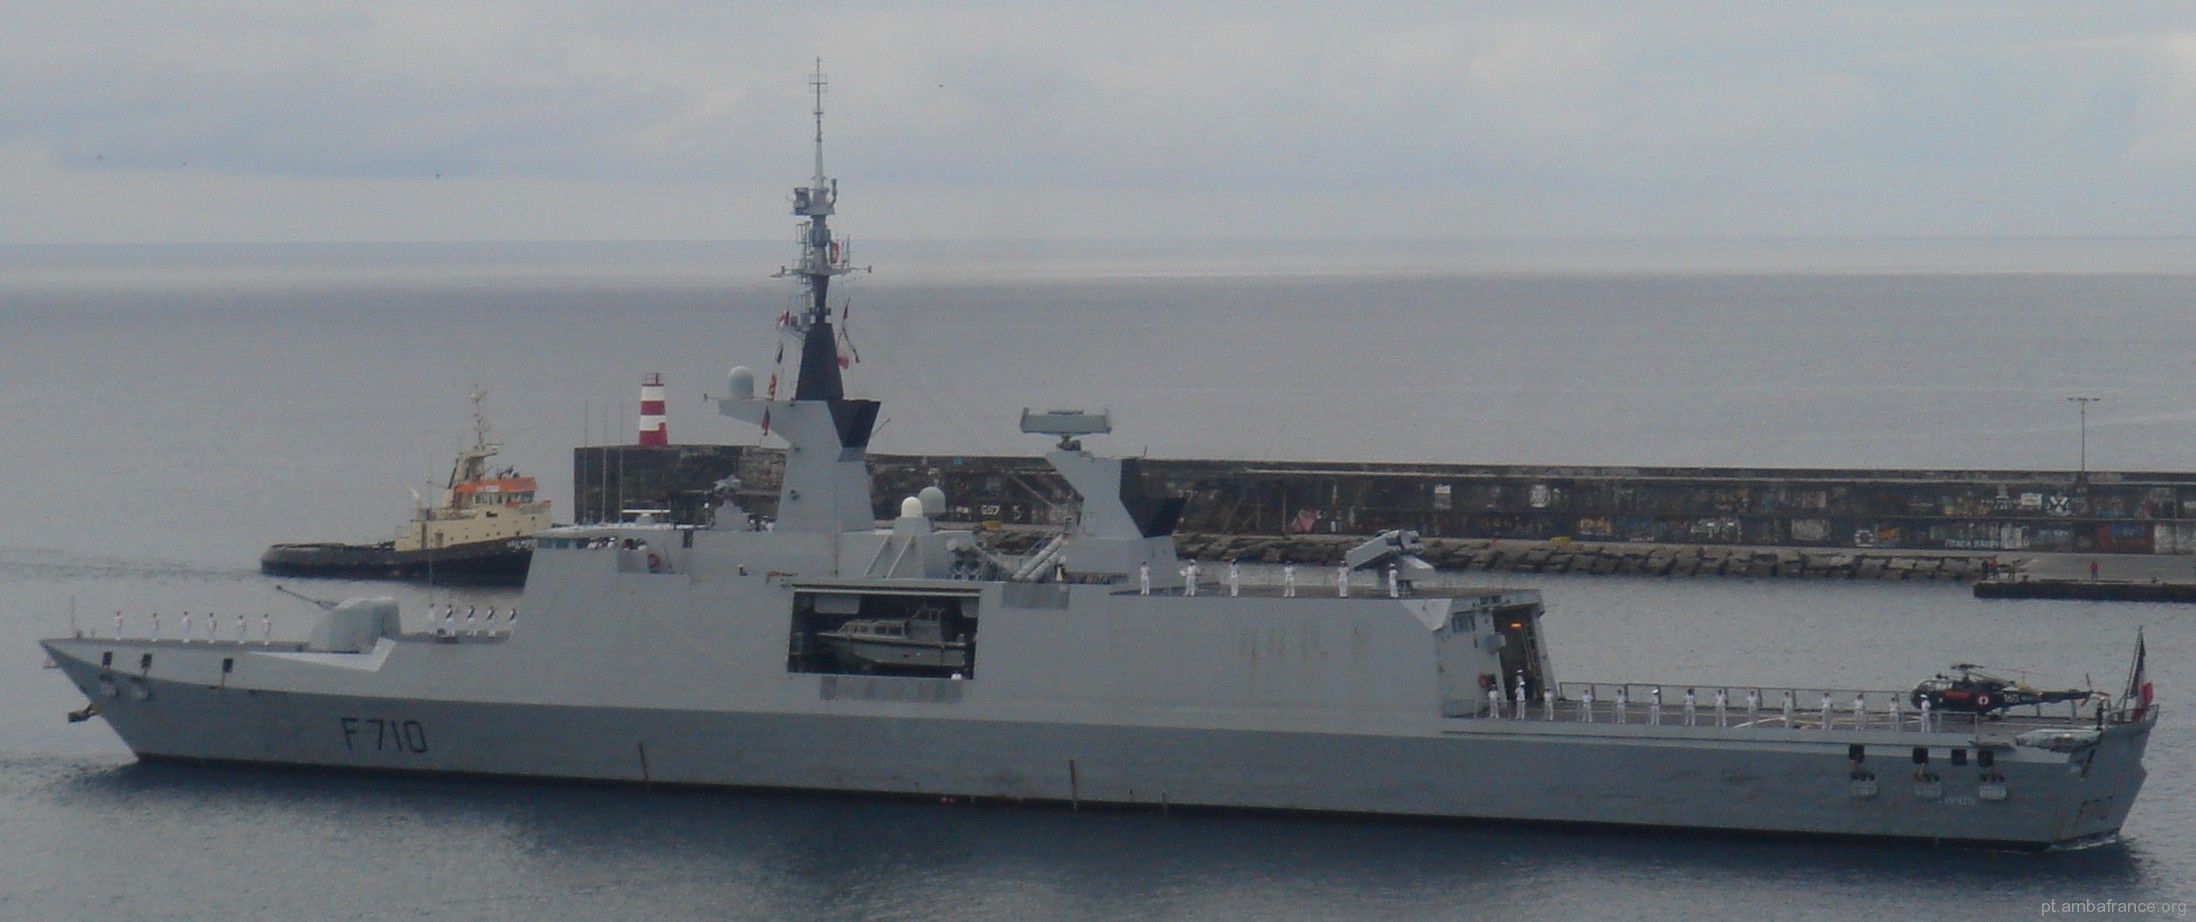 f-710 fs la fayette class frigate french navy crotale edir sam exocet mm40 ssm 07